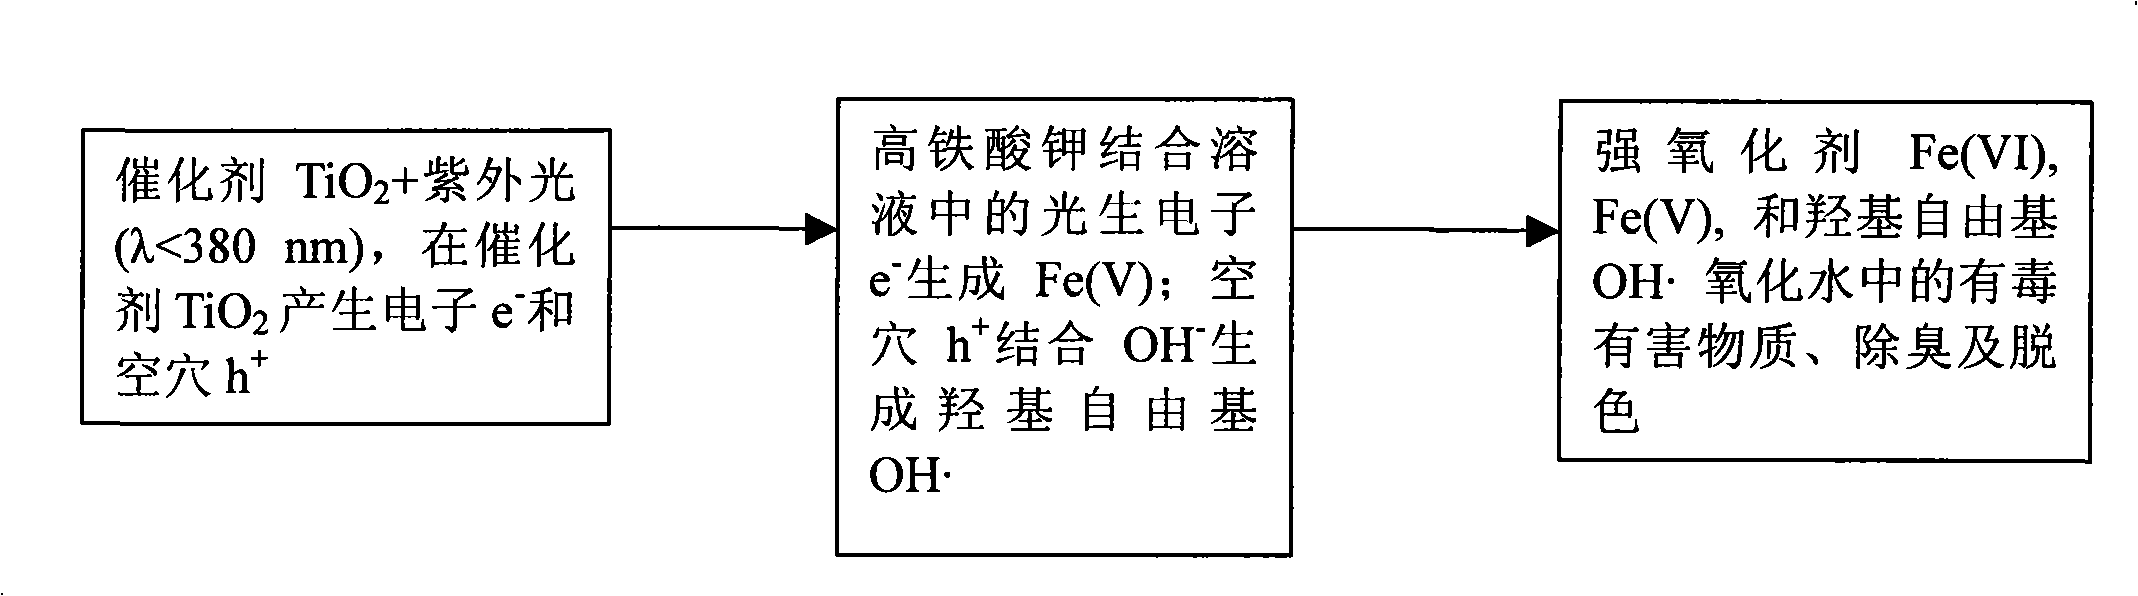 Potassium ferrate-photocatalysis oxidation method and apparatus